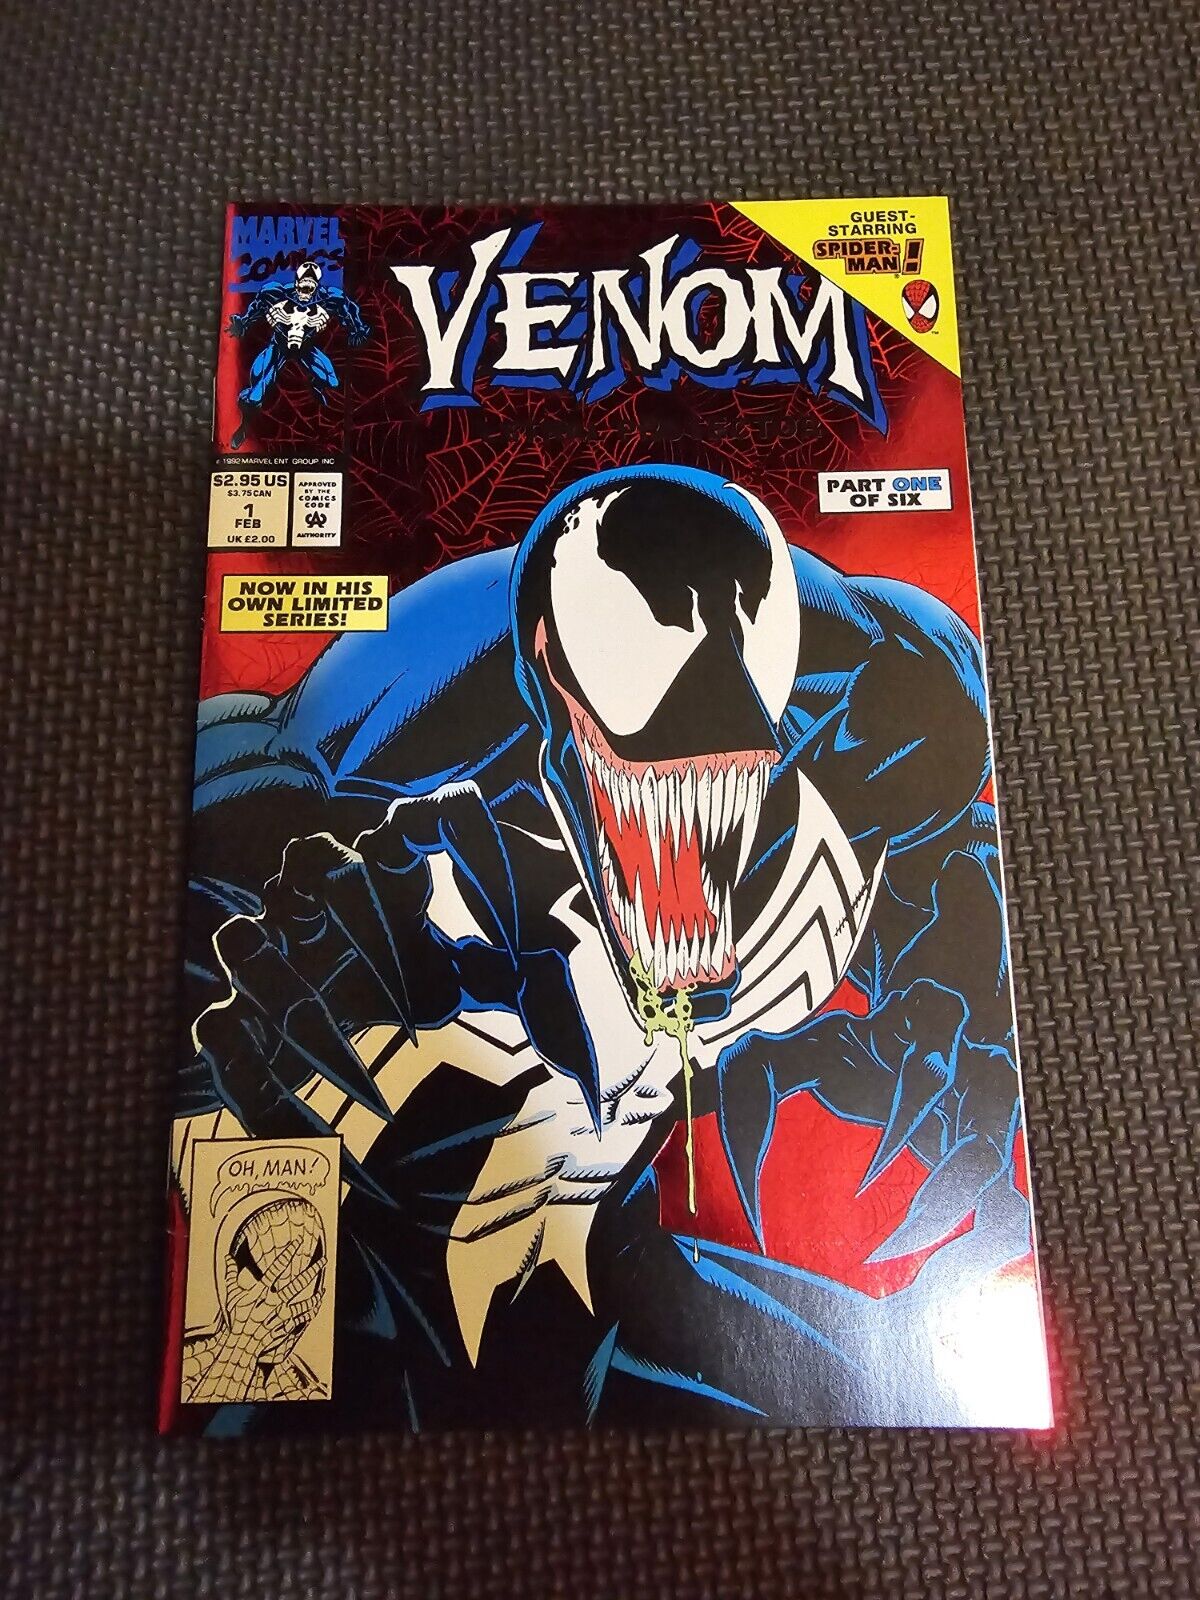 Venom Lethal Protector (1993) Complete Set Issues #1-6 Marvel Comics VF/NM